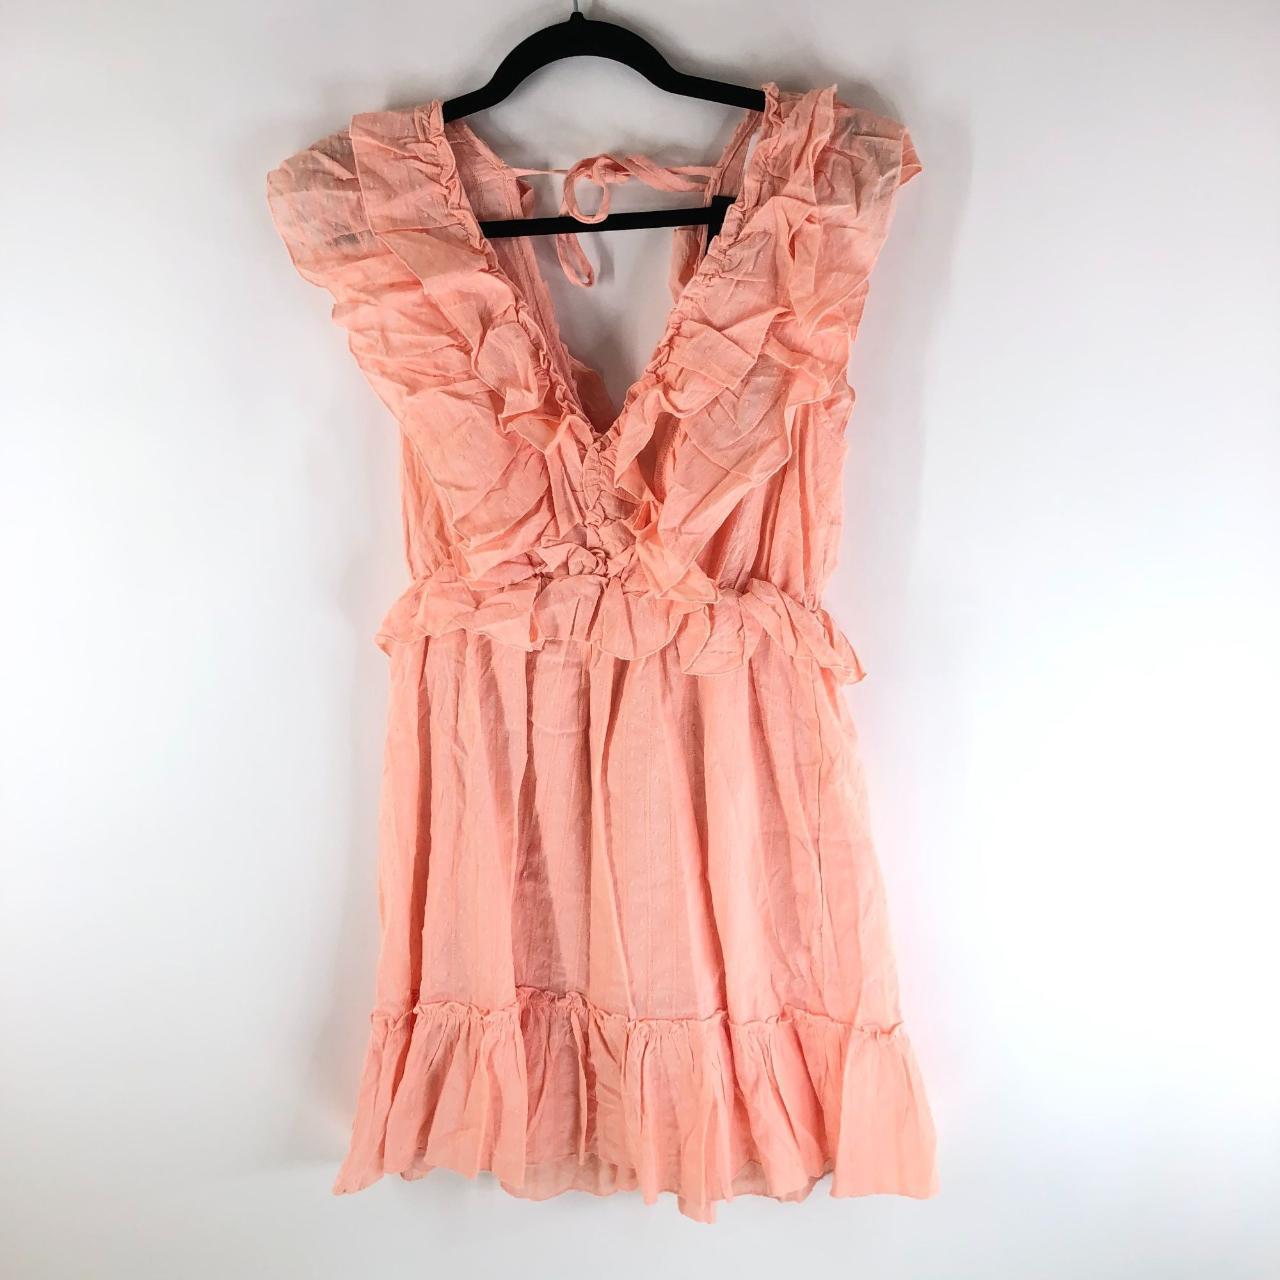 Dress by Sbetro 